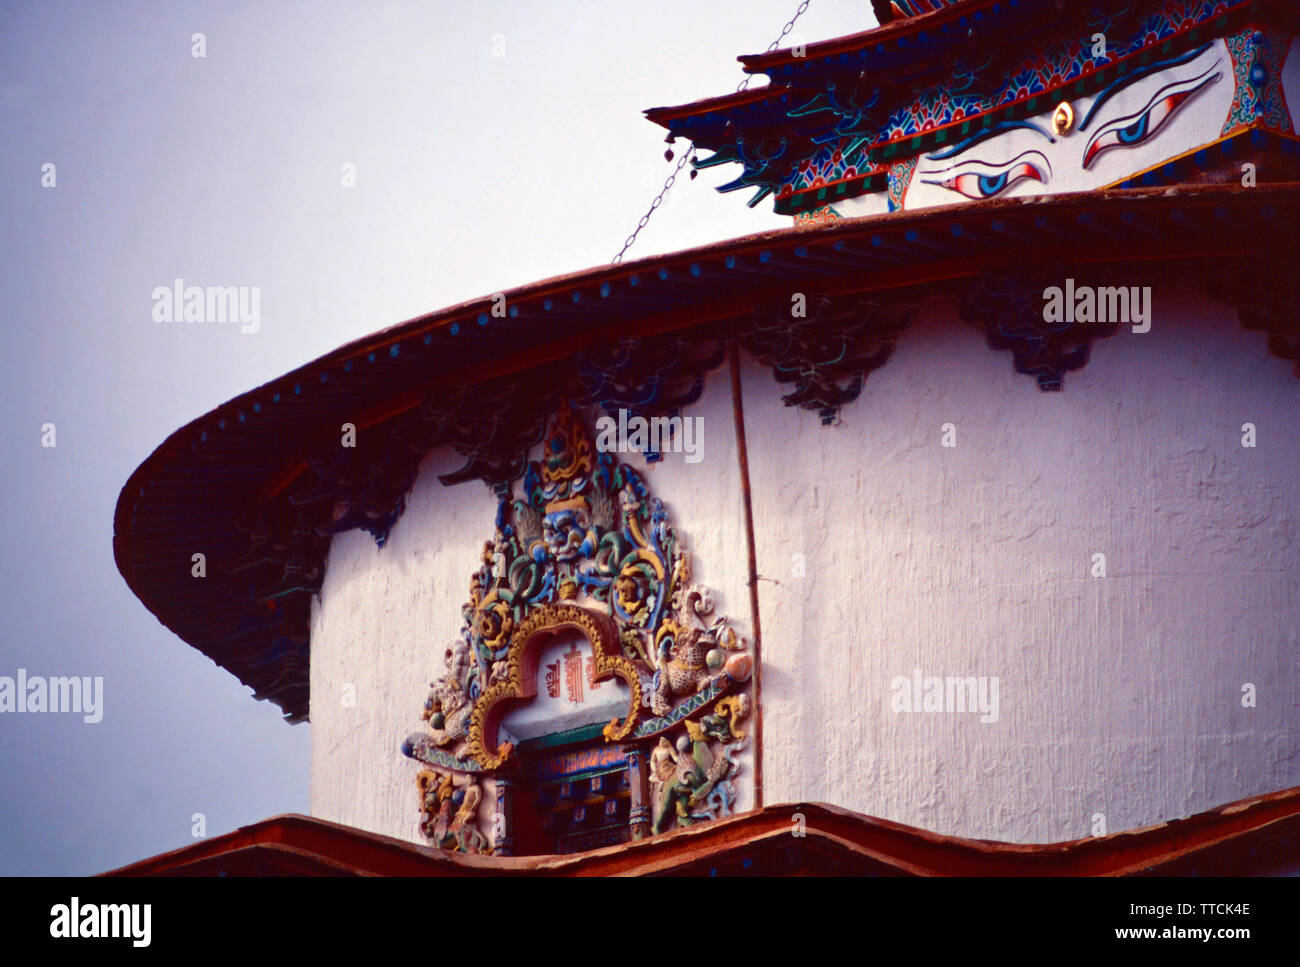 Kumbum,Palcho Chode monastery,Gyantse,Tibet Stock Photo